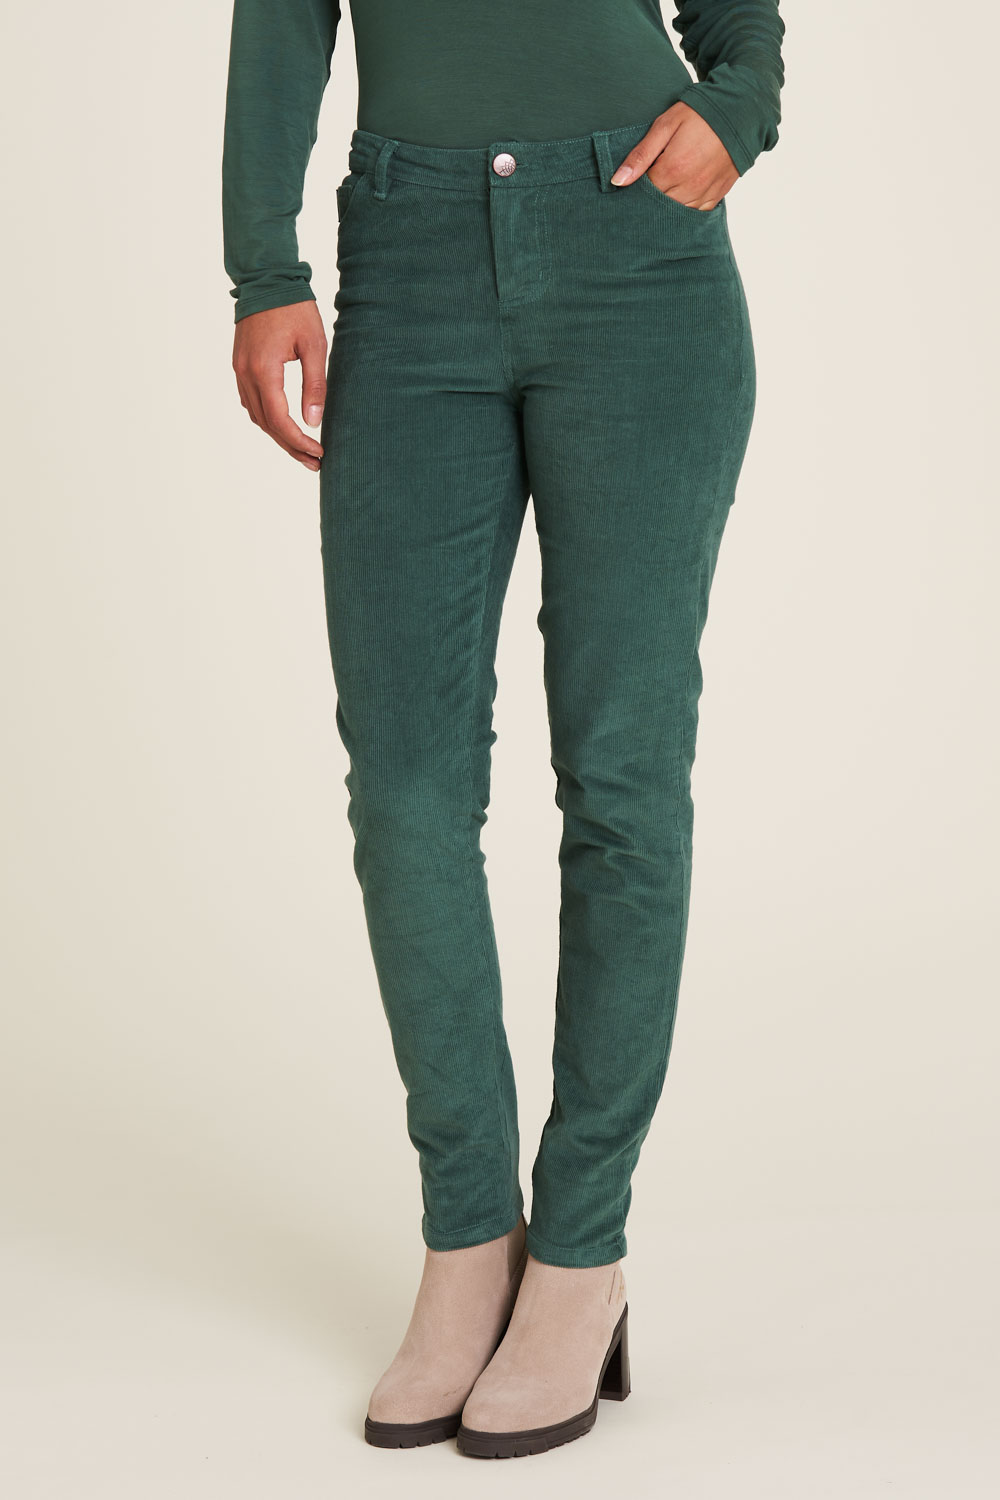 pantalon velours vert tranquillo